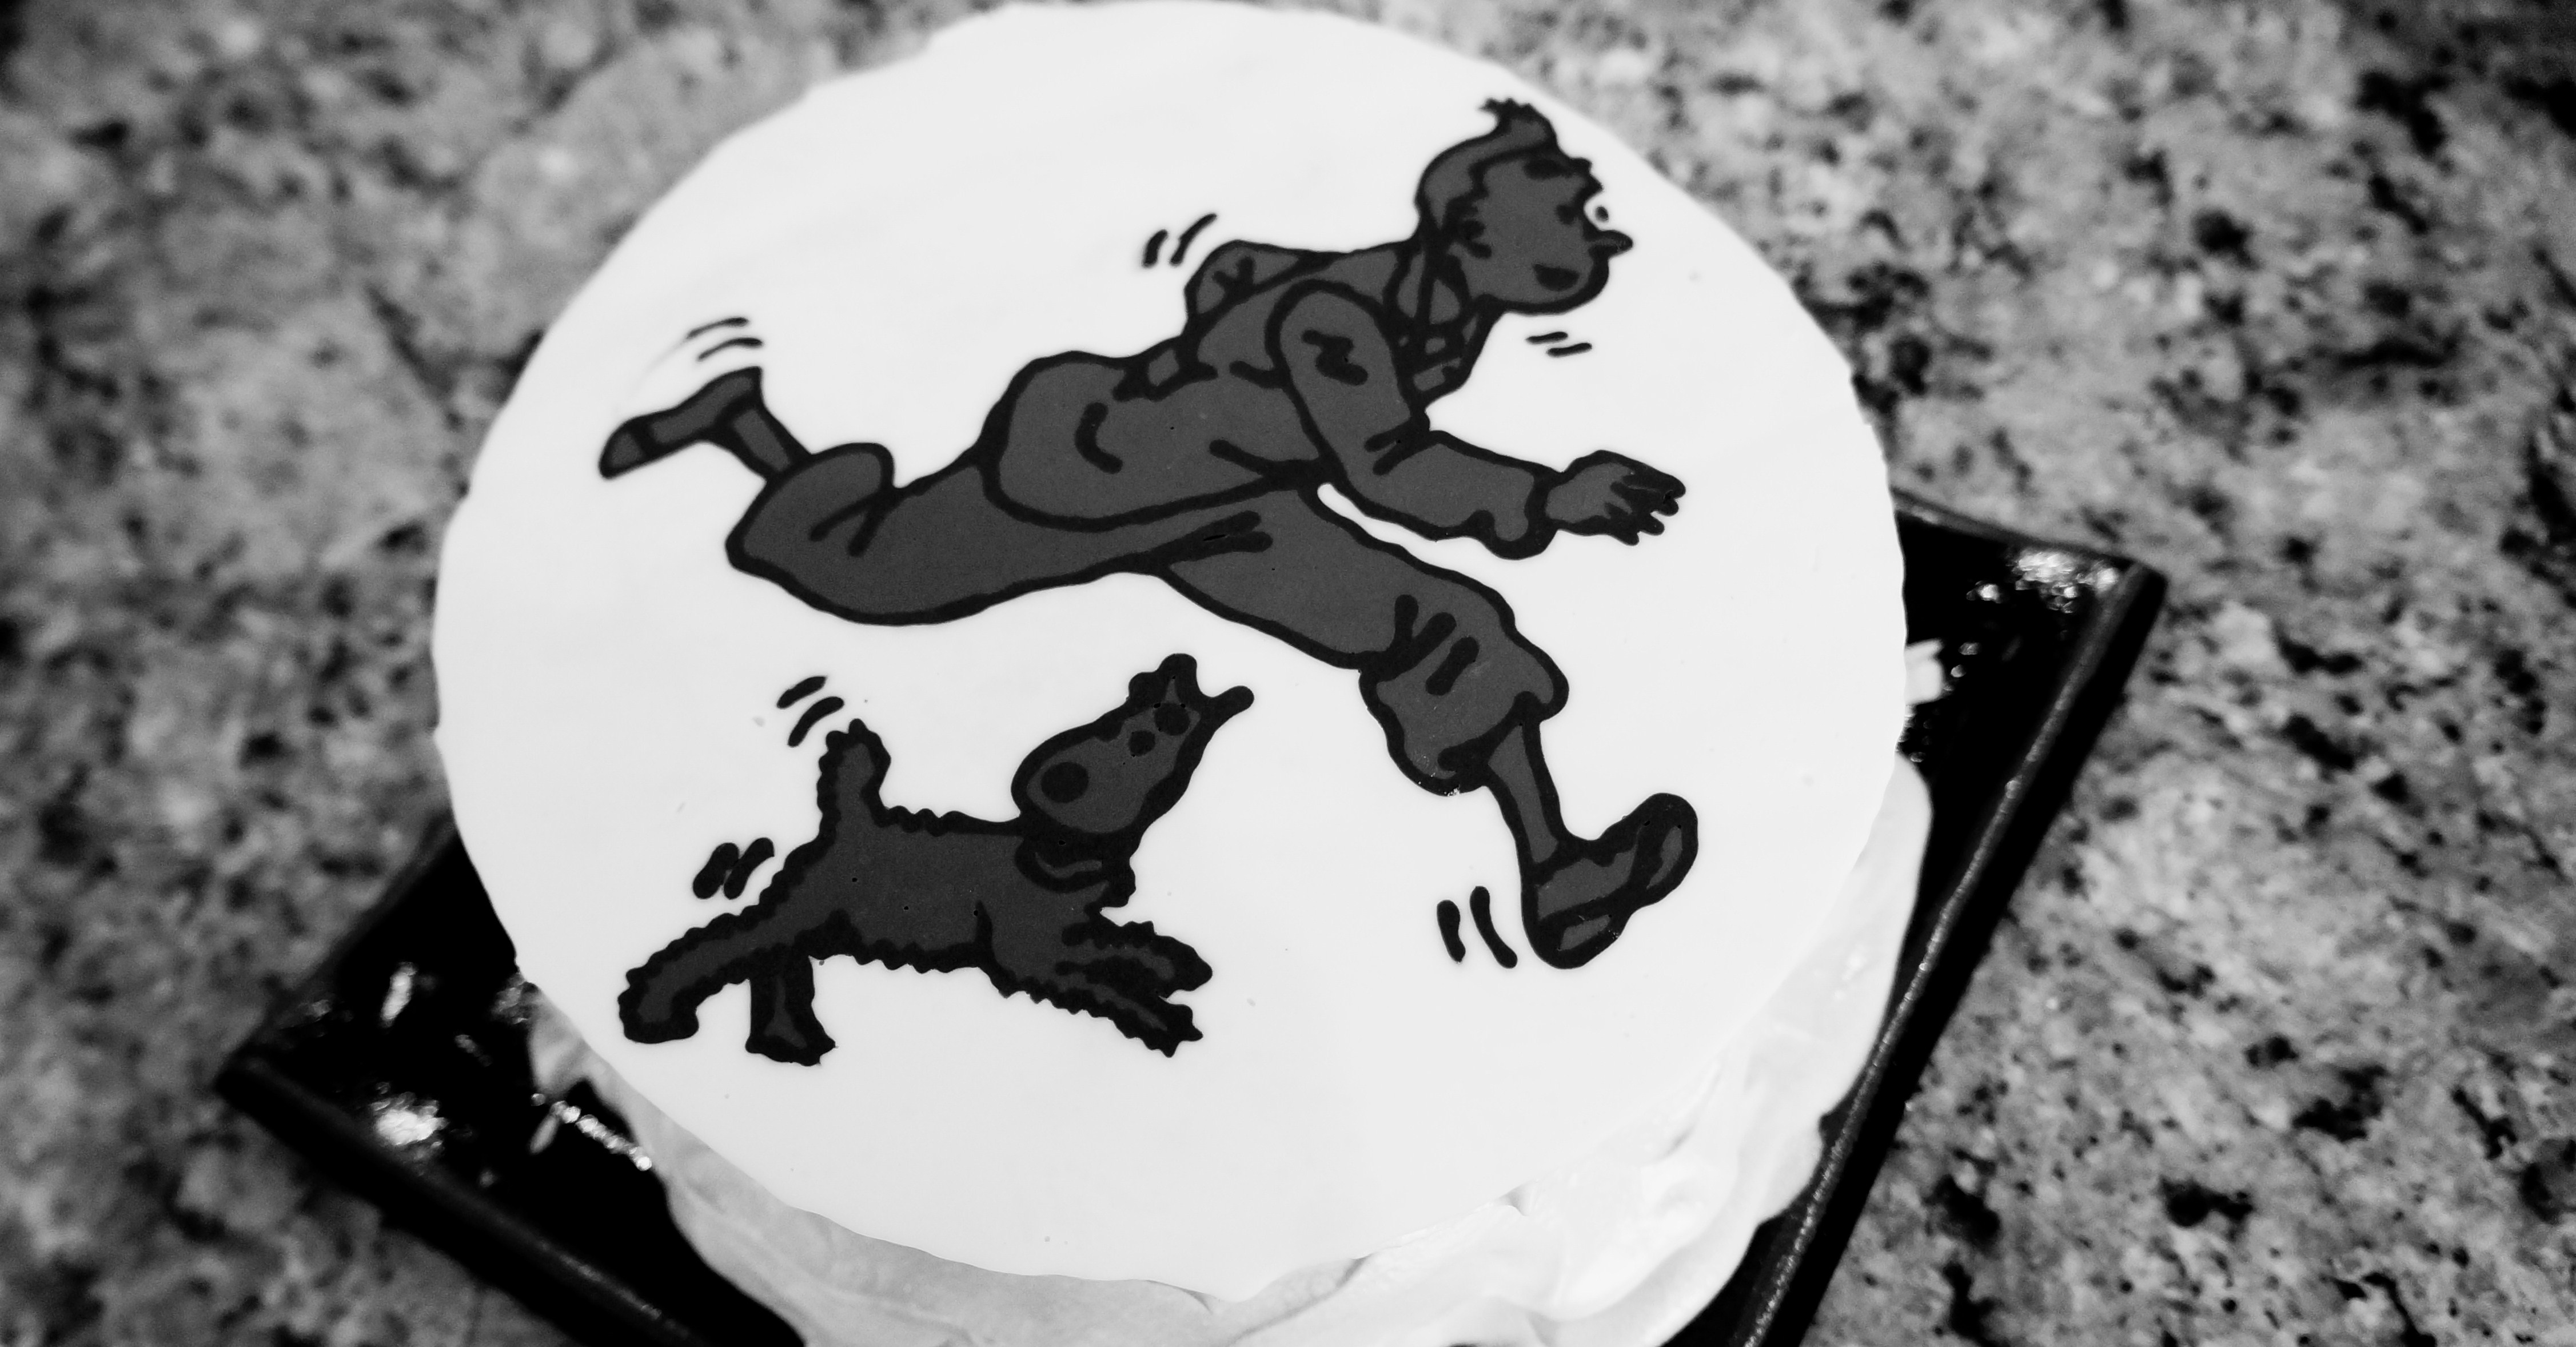 Tintin cake in black and white